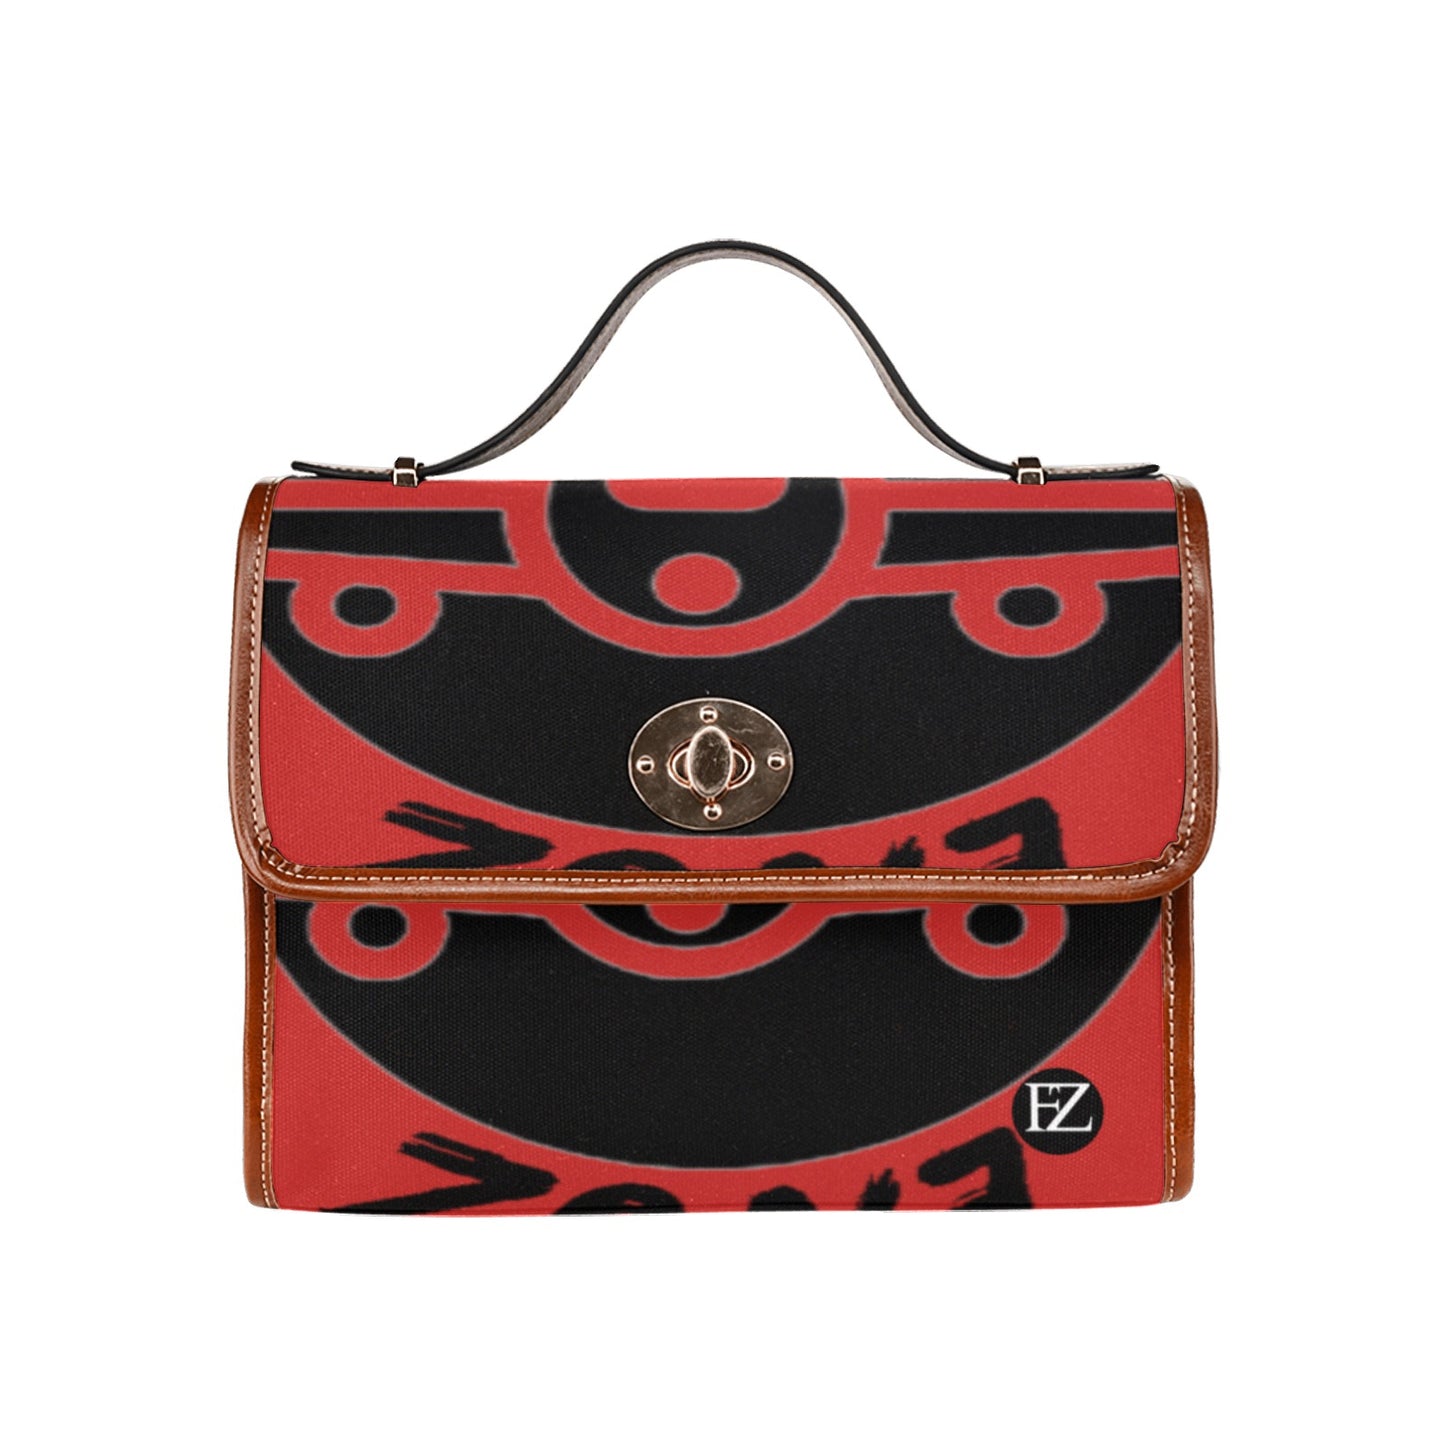 fz women's handbag - abstract one size / fz future handbag - abstract red all over print waterproof canvas bag(model1641)(brown strap)